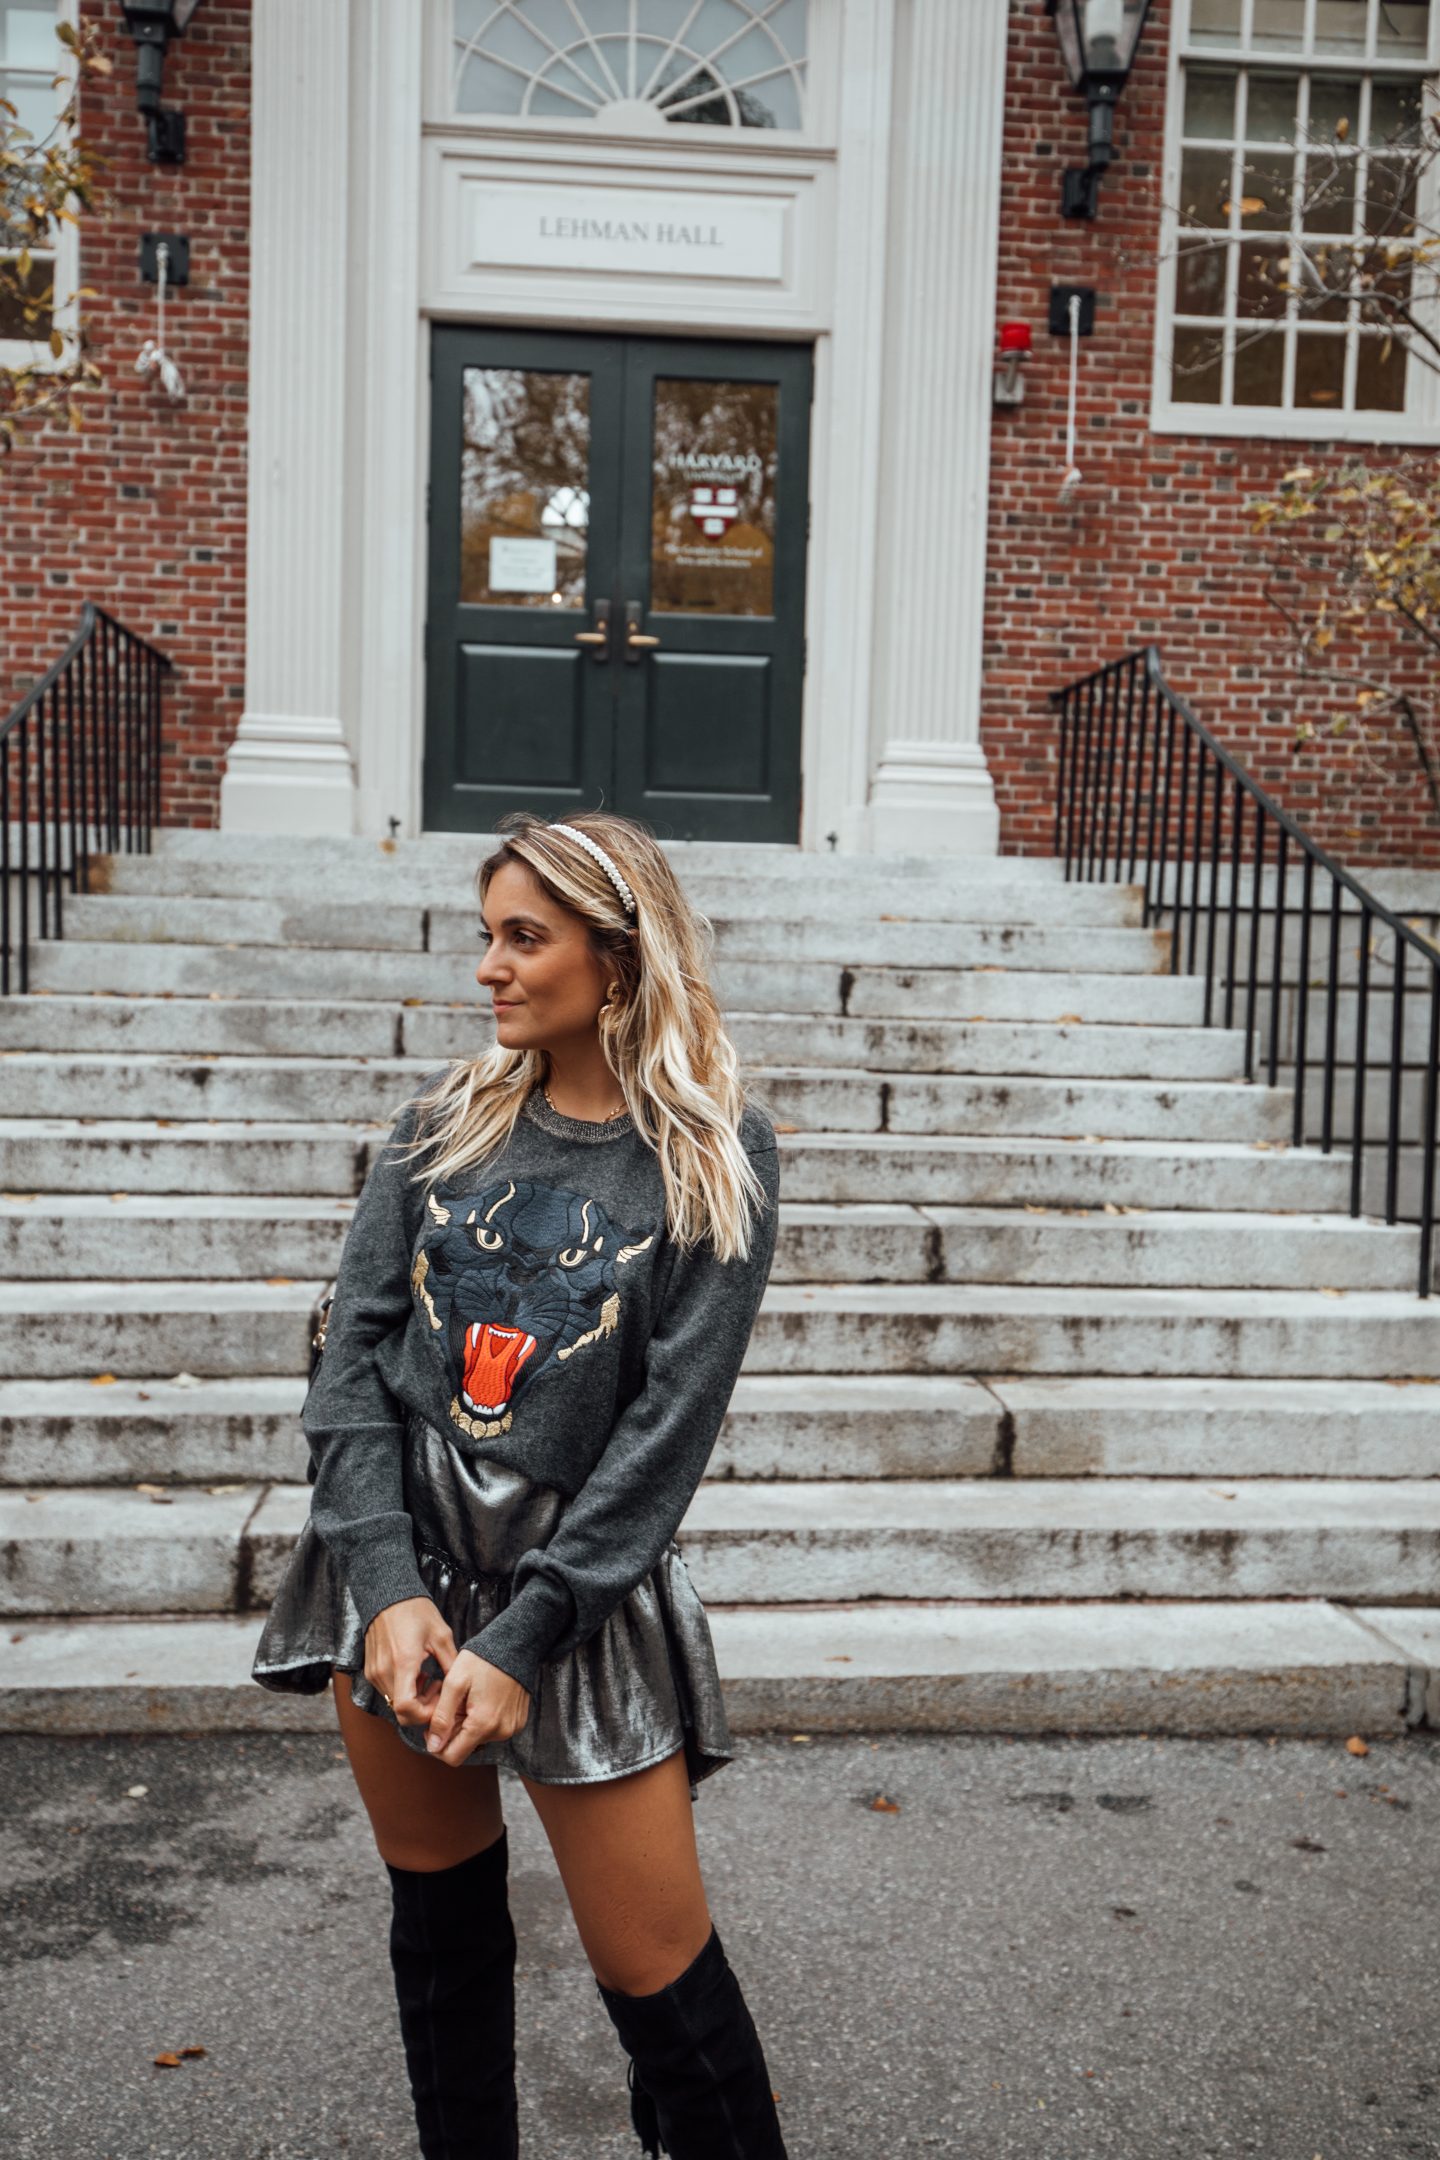 Visiter Harvard Etats-Unis - Blondie Baby blog voyages et mode